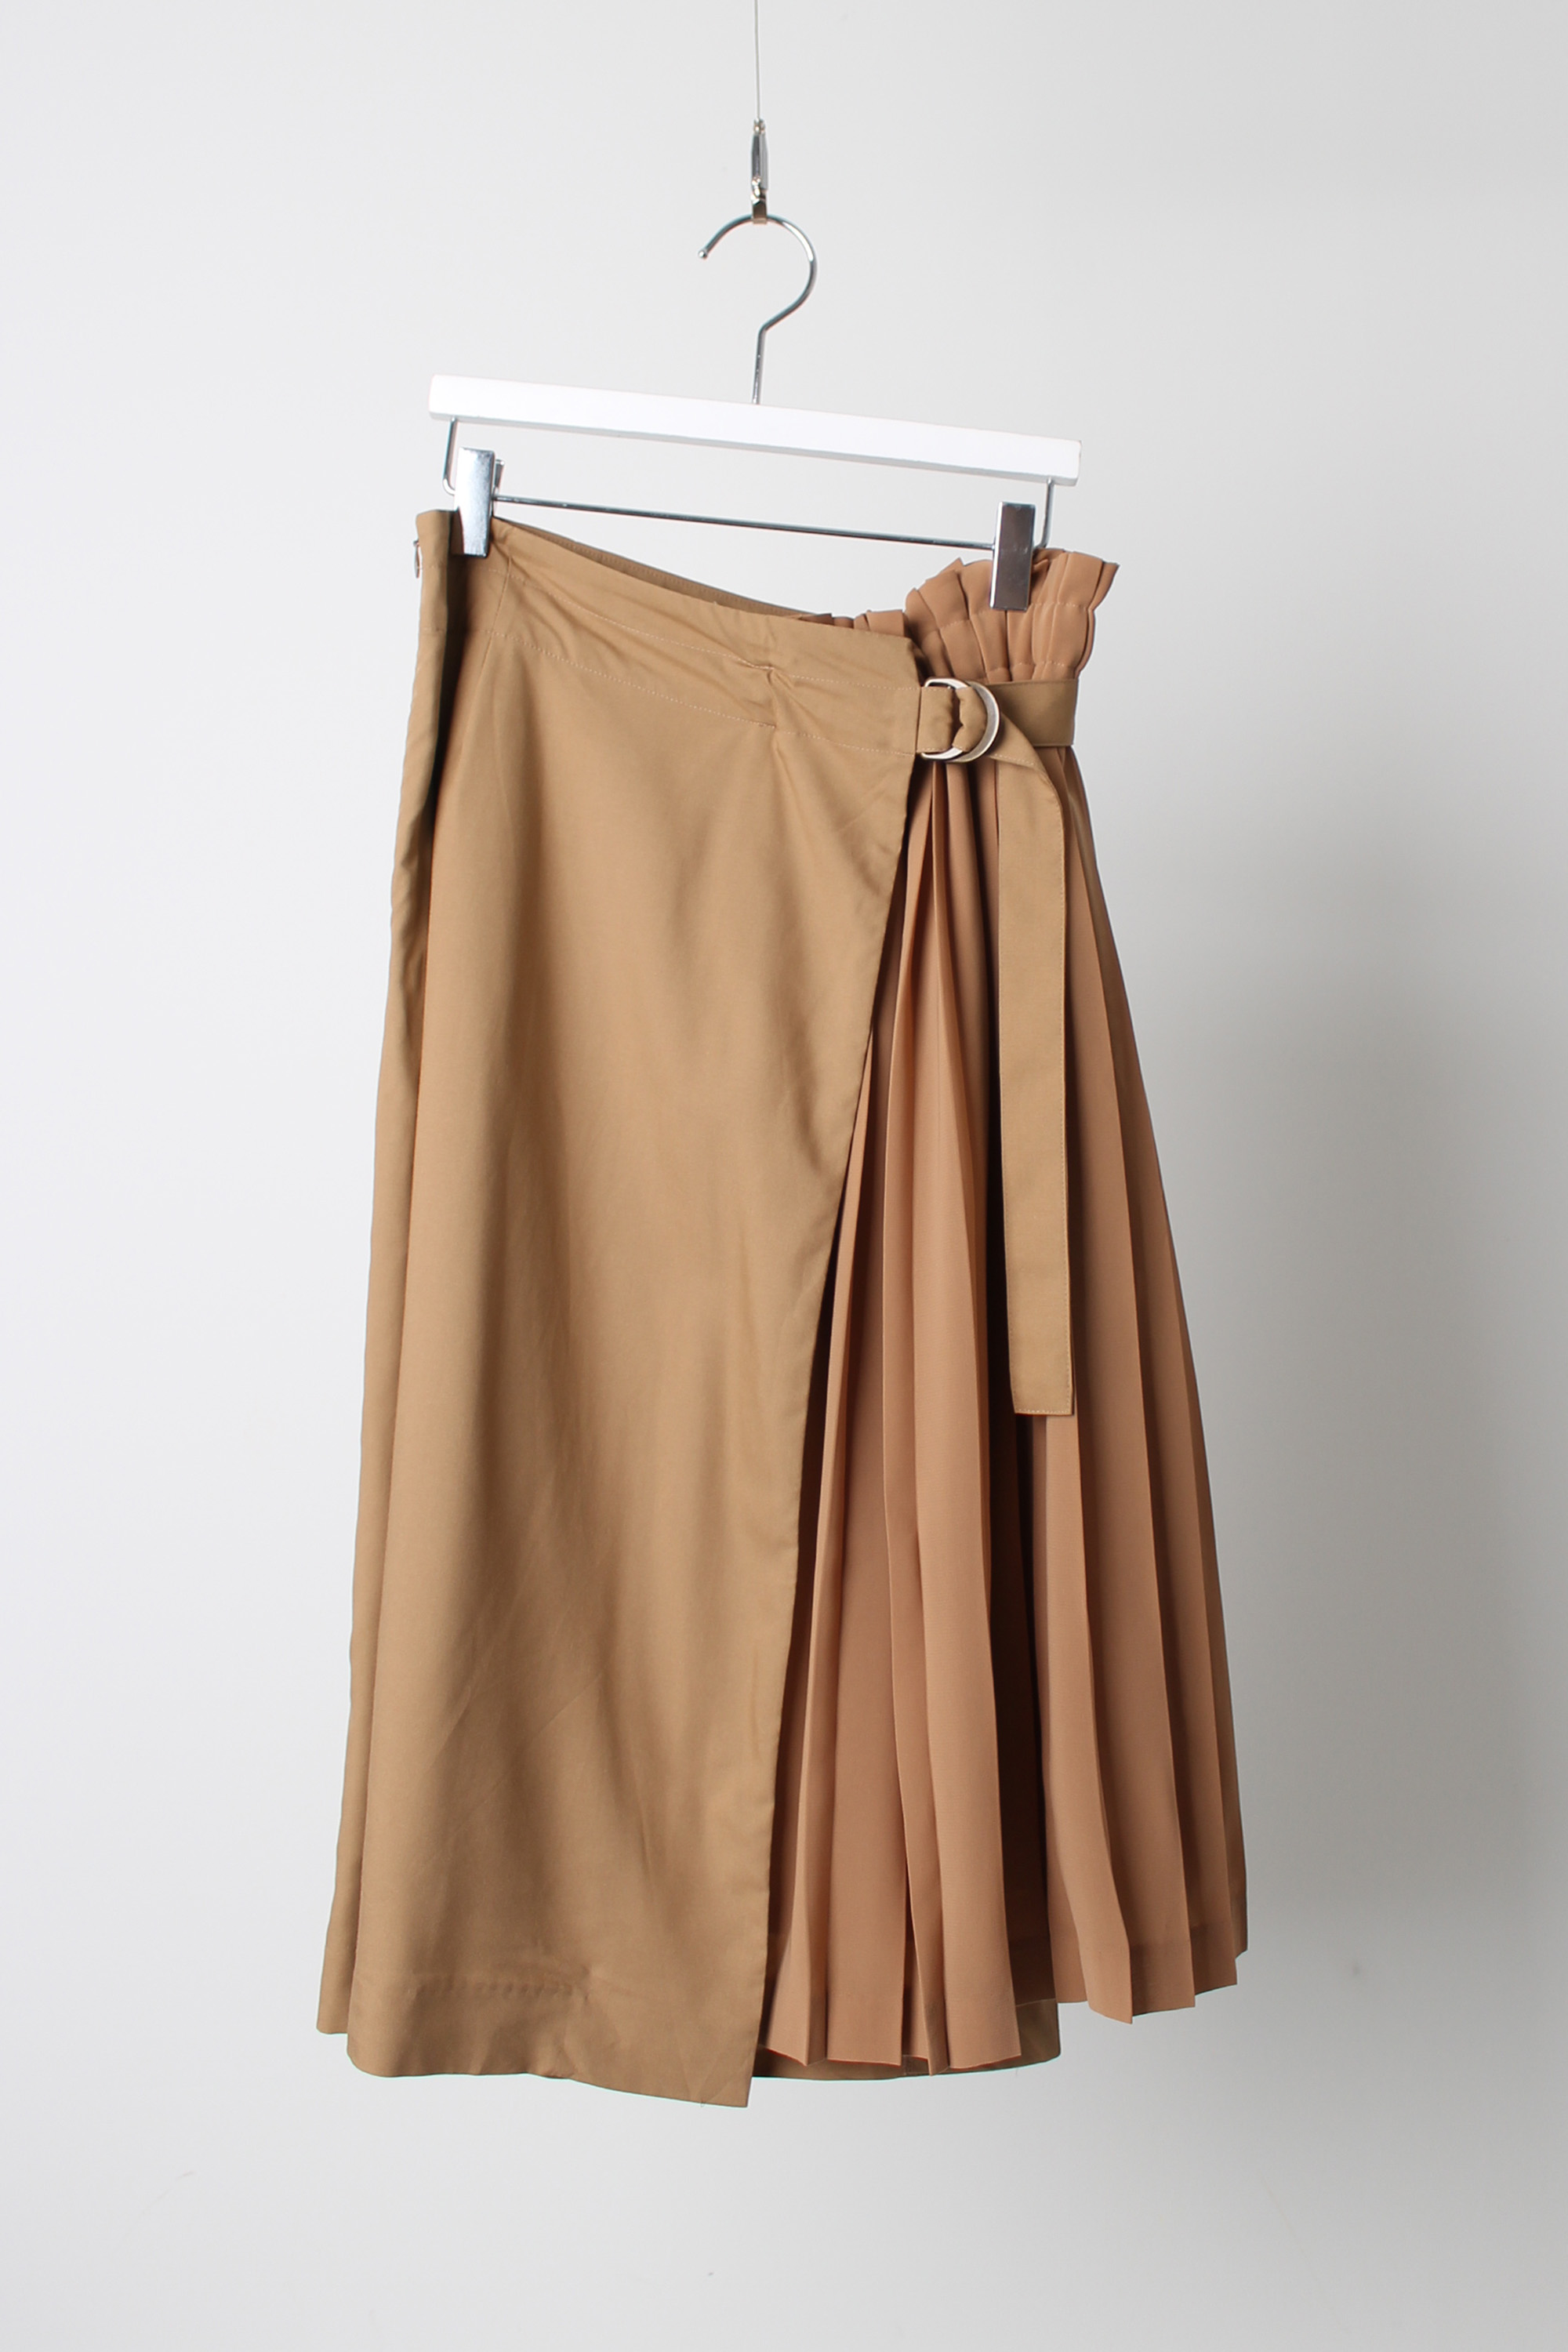 BEATRICE wrap skirt